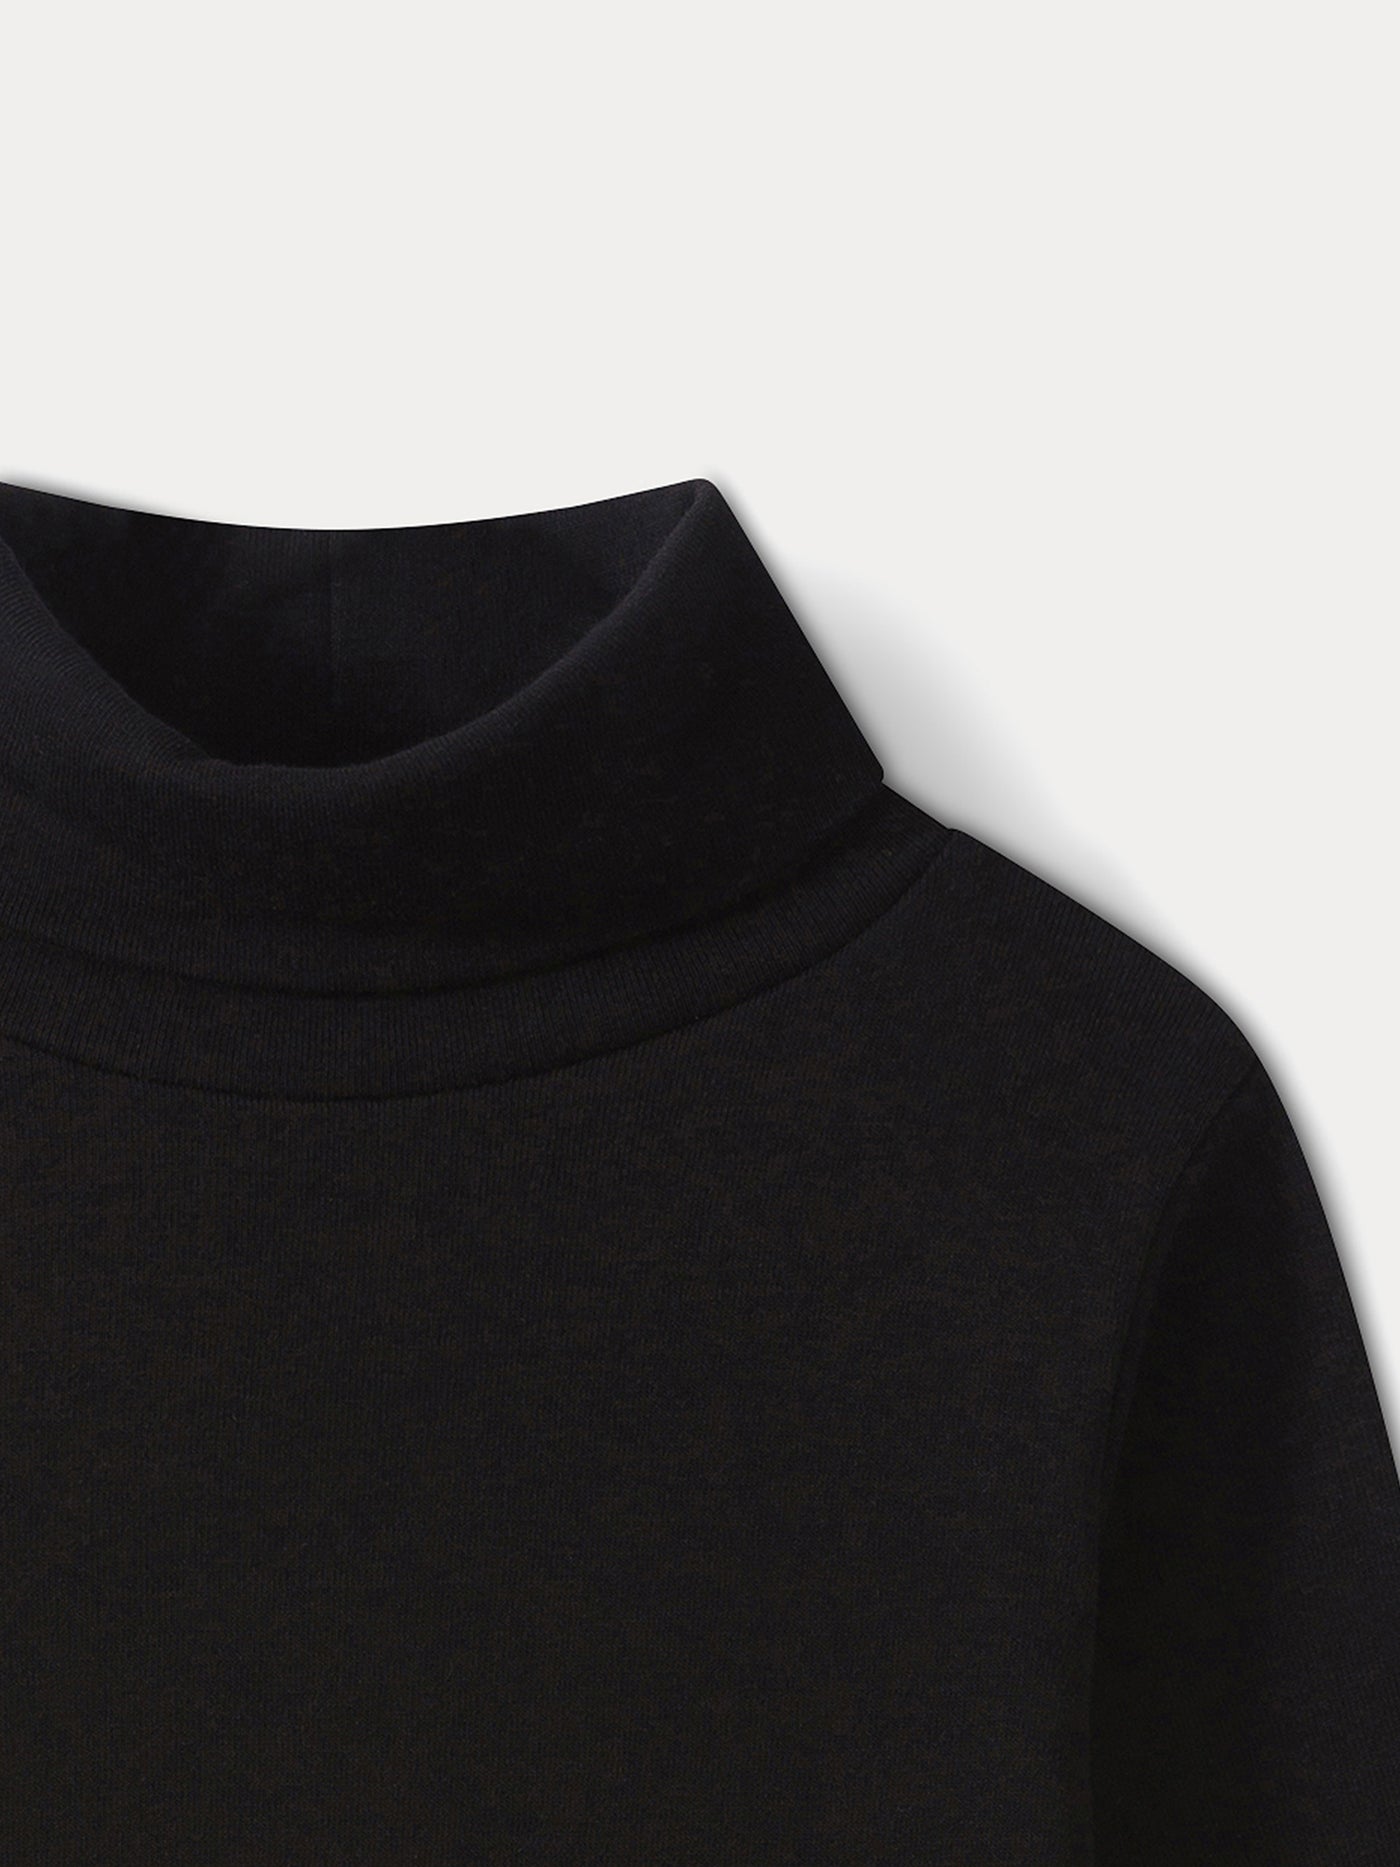 Thin turtleneck sweater black